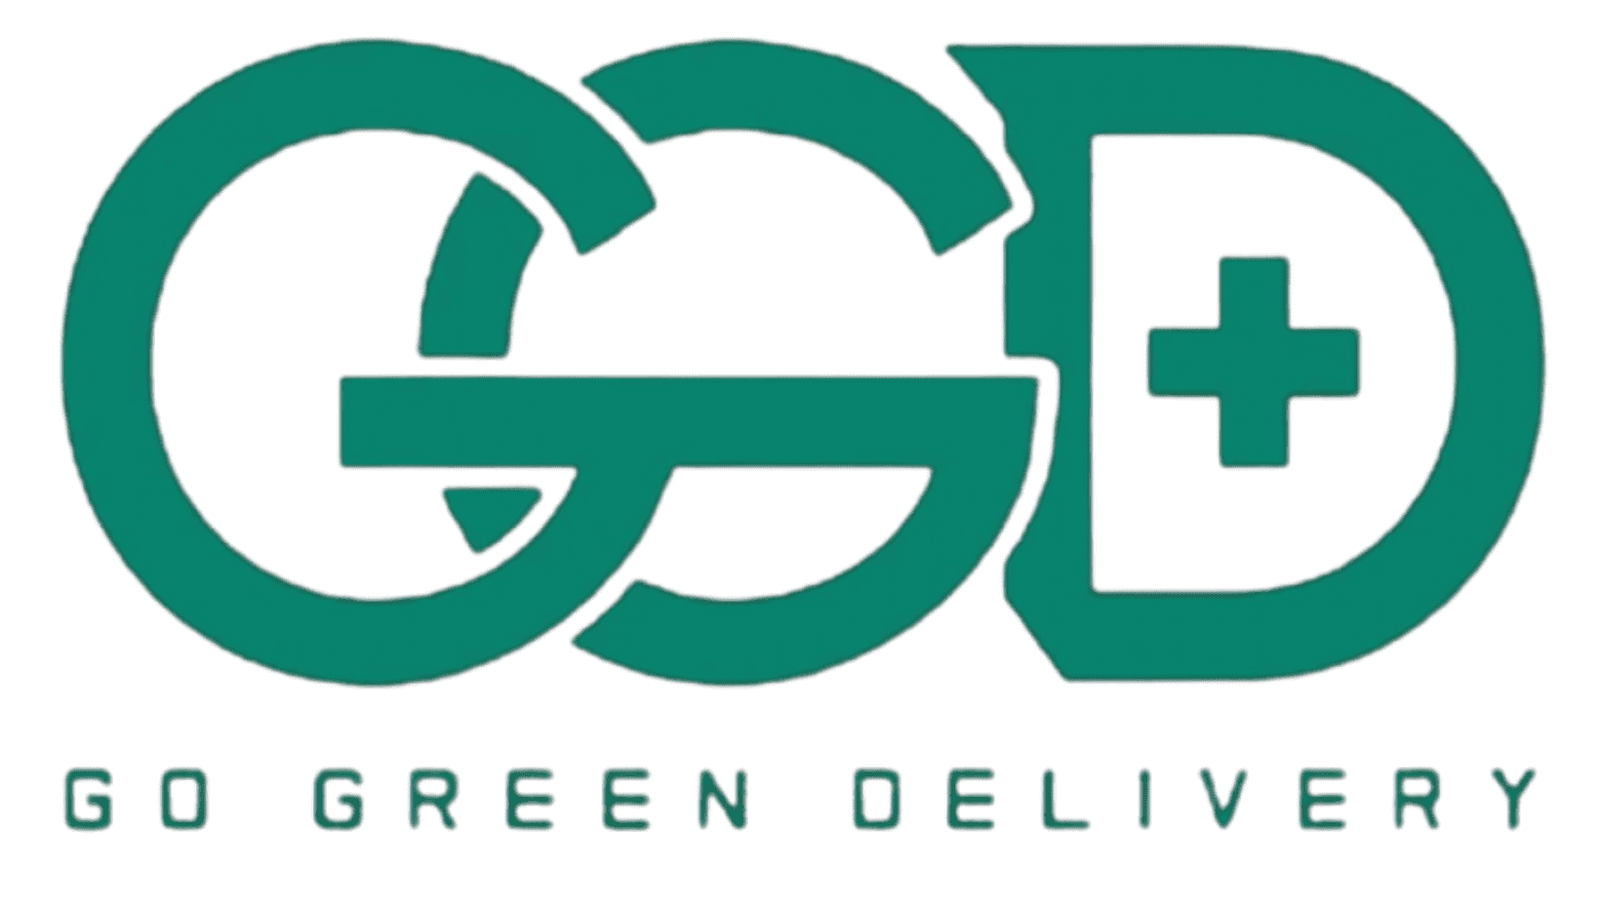 562 Go Green